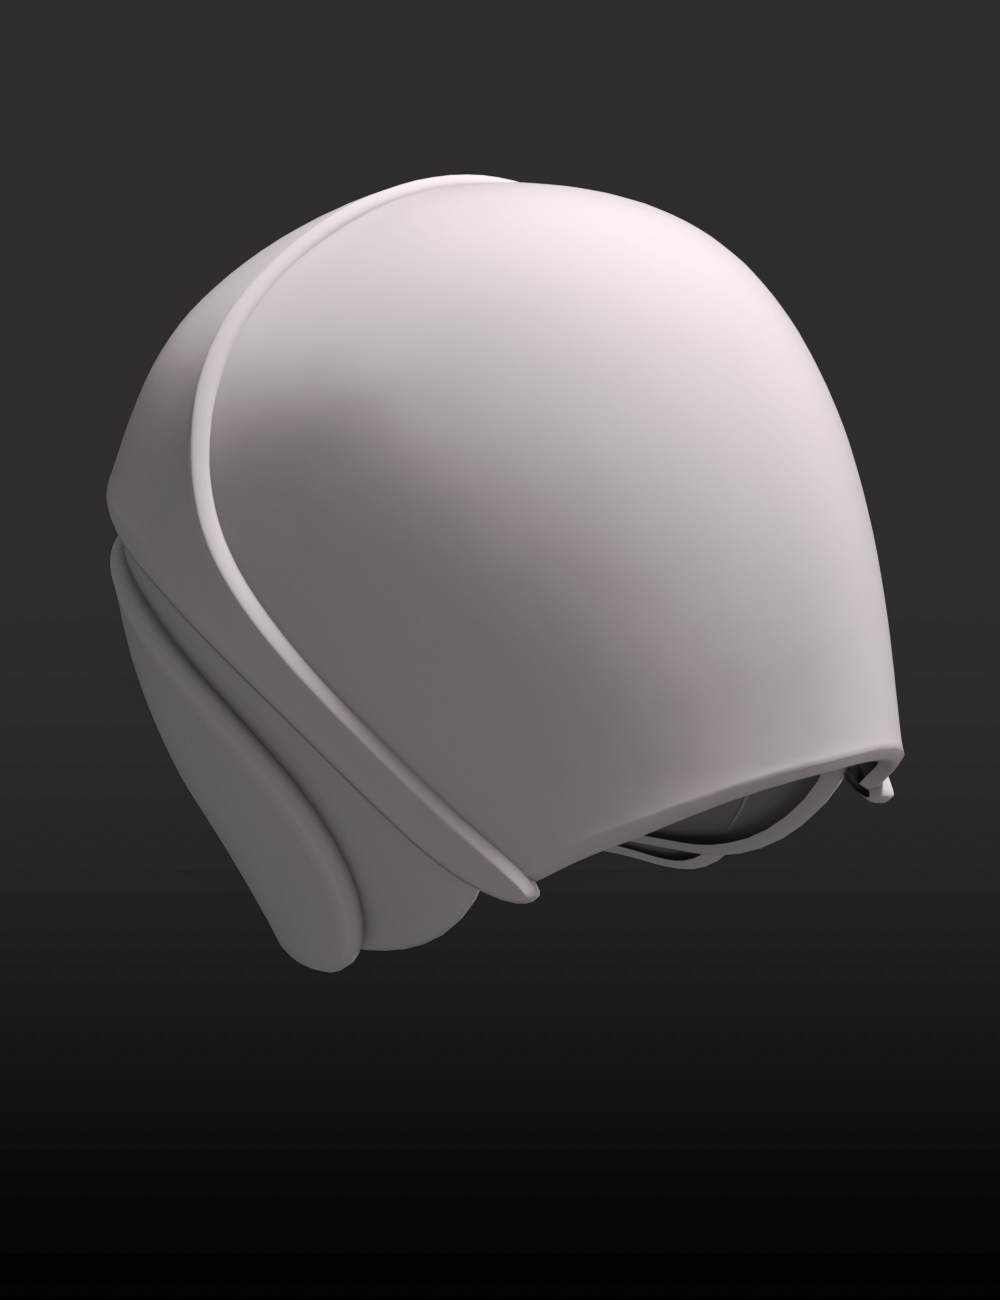 Sci-fi Rebel Rider Outfit Helmet for Genesis 8.1 Female by: Yura, 3D Models by Daz 3D